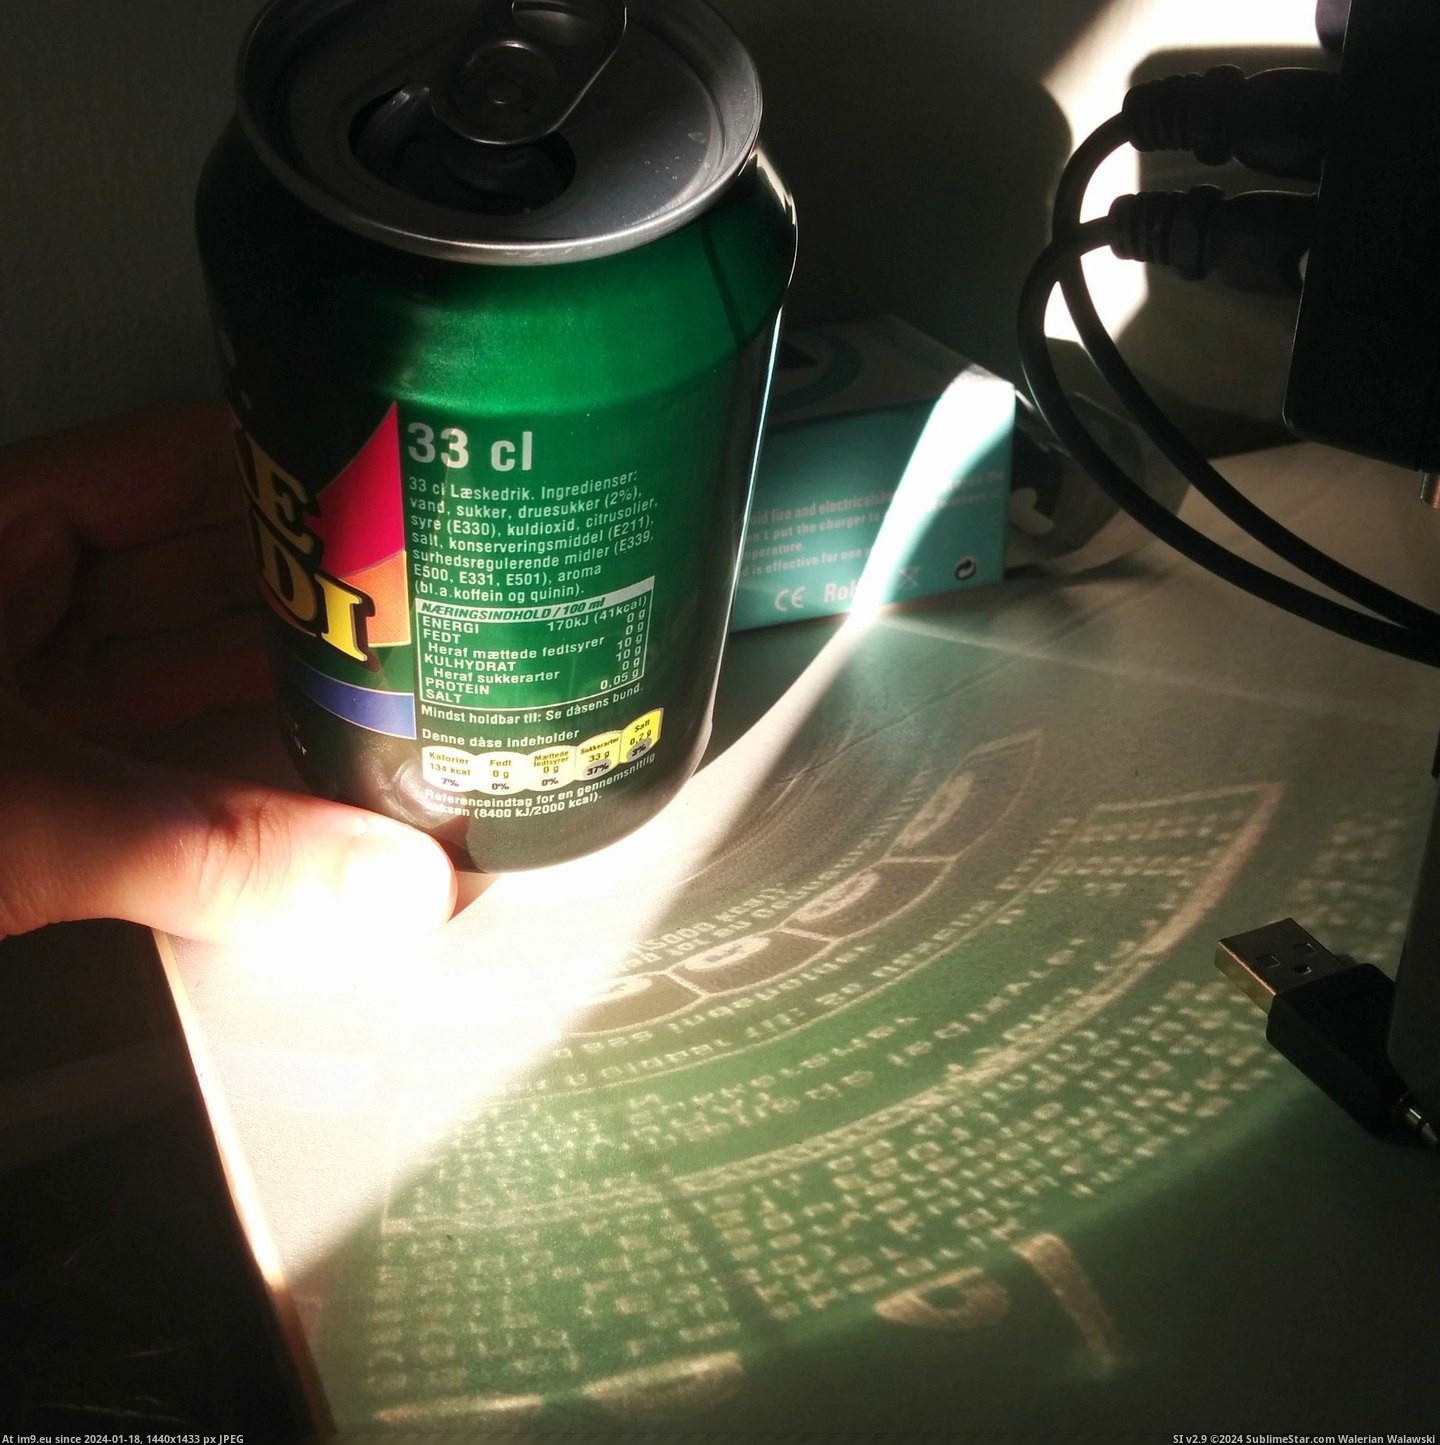 #Writing #Projected #Sunlight [Mildlyinteresting] The sunlight projected the can's writing Pic. (Bild von album My r/MILDLYINTERESTING favs))